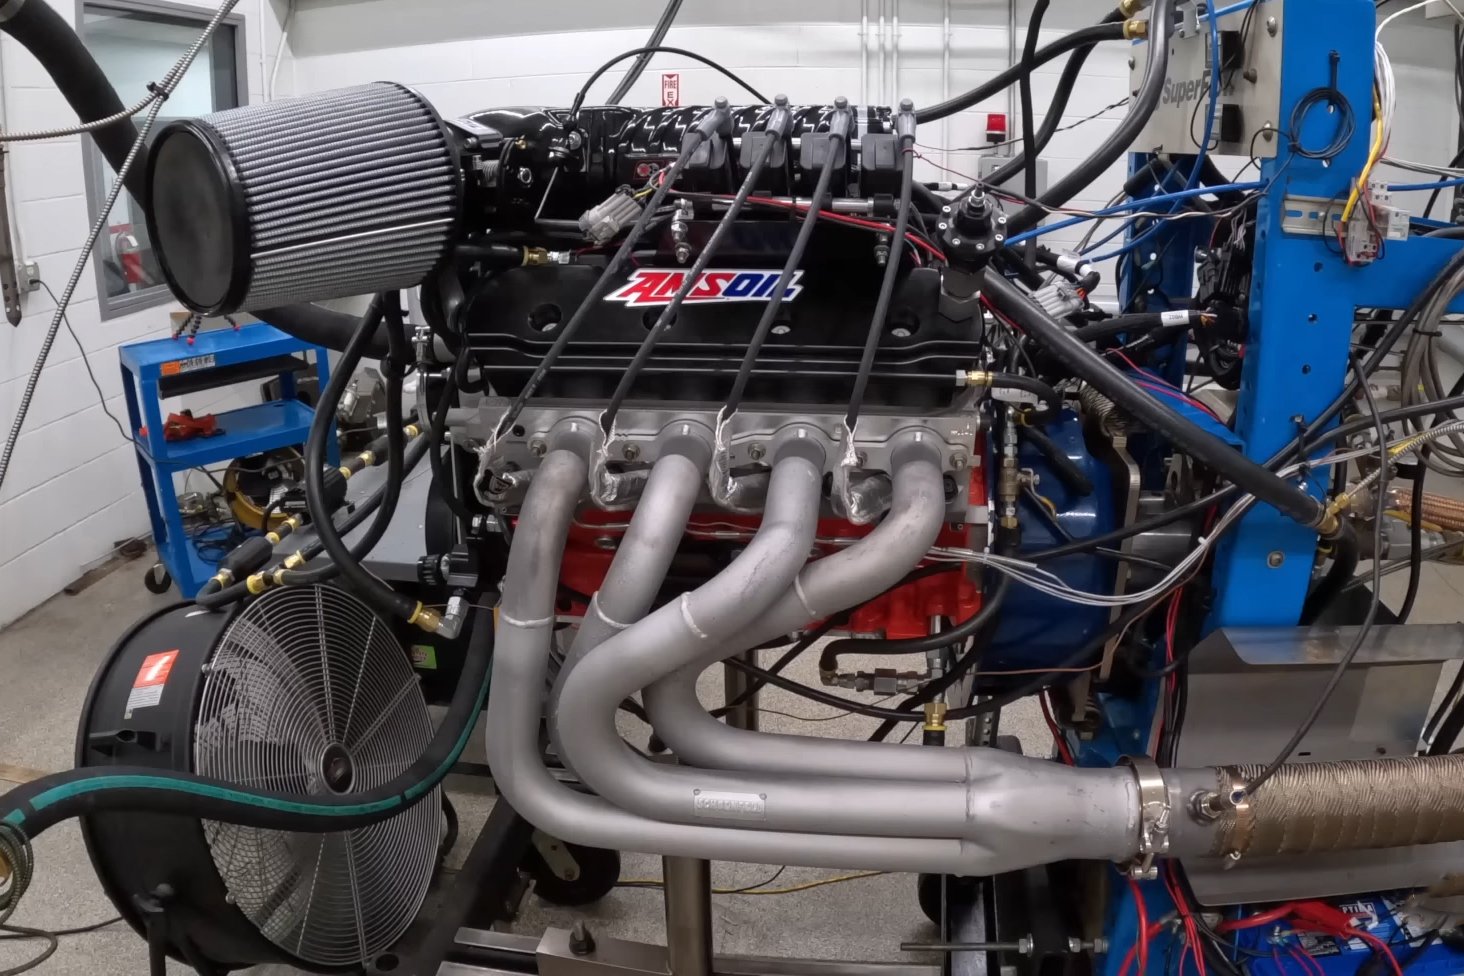 Post-Dyno Teardown Results Of AMSOIL’s 1,000-Horsepower LS Engine